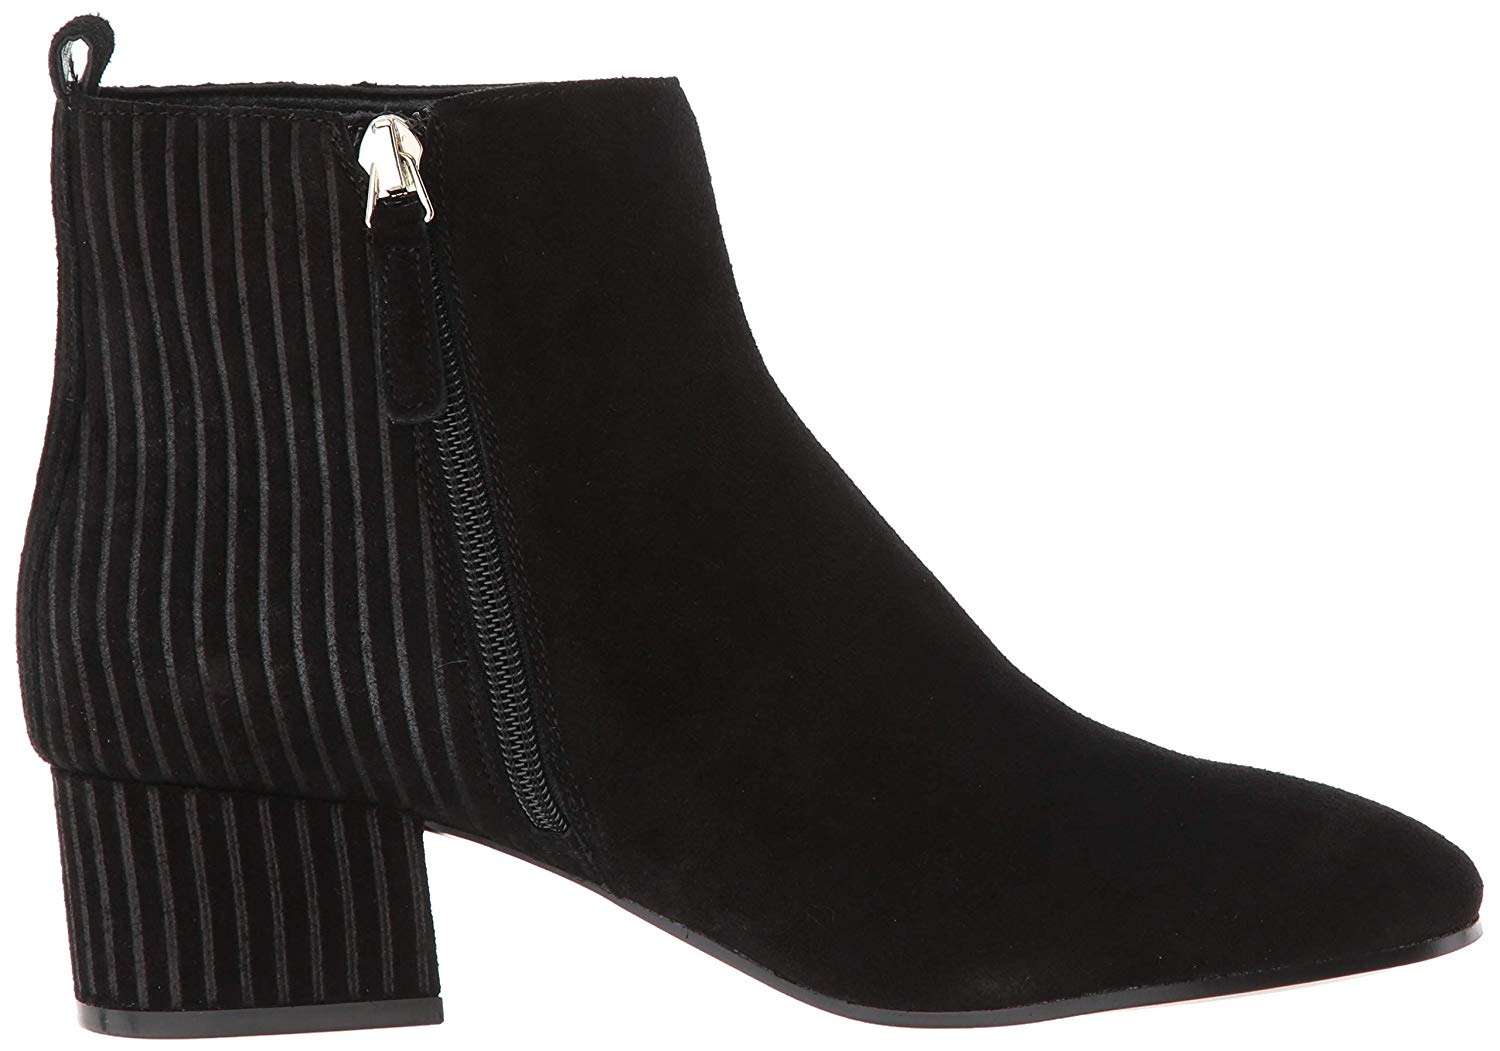 Nine West Womens Lamonto Leather Round Toe Ankle Fashion Boots, Black